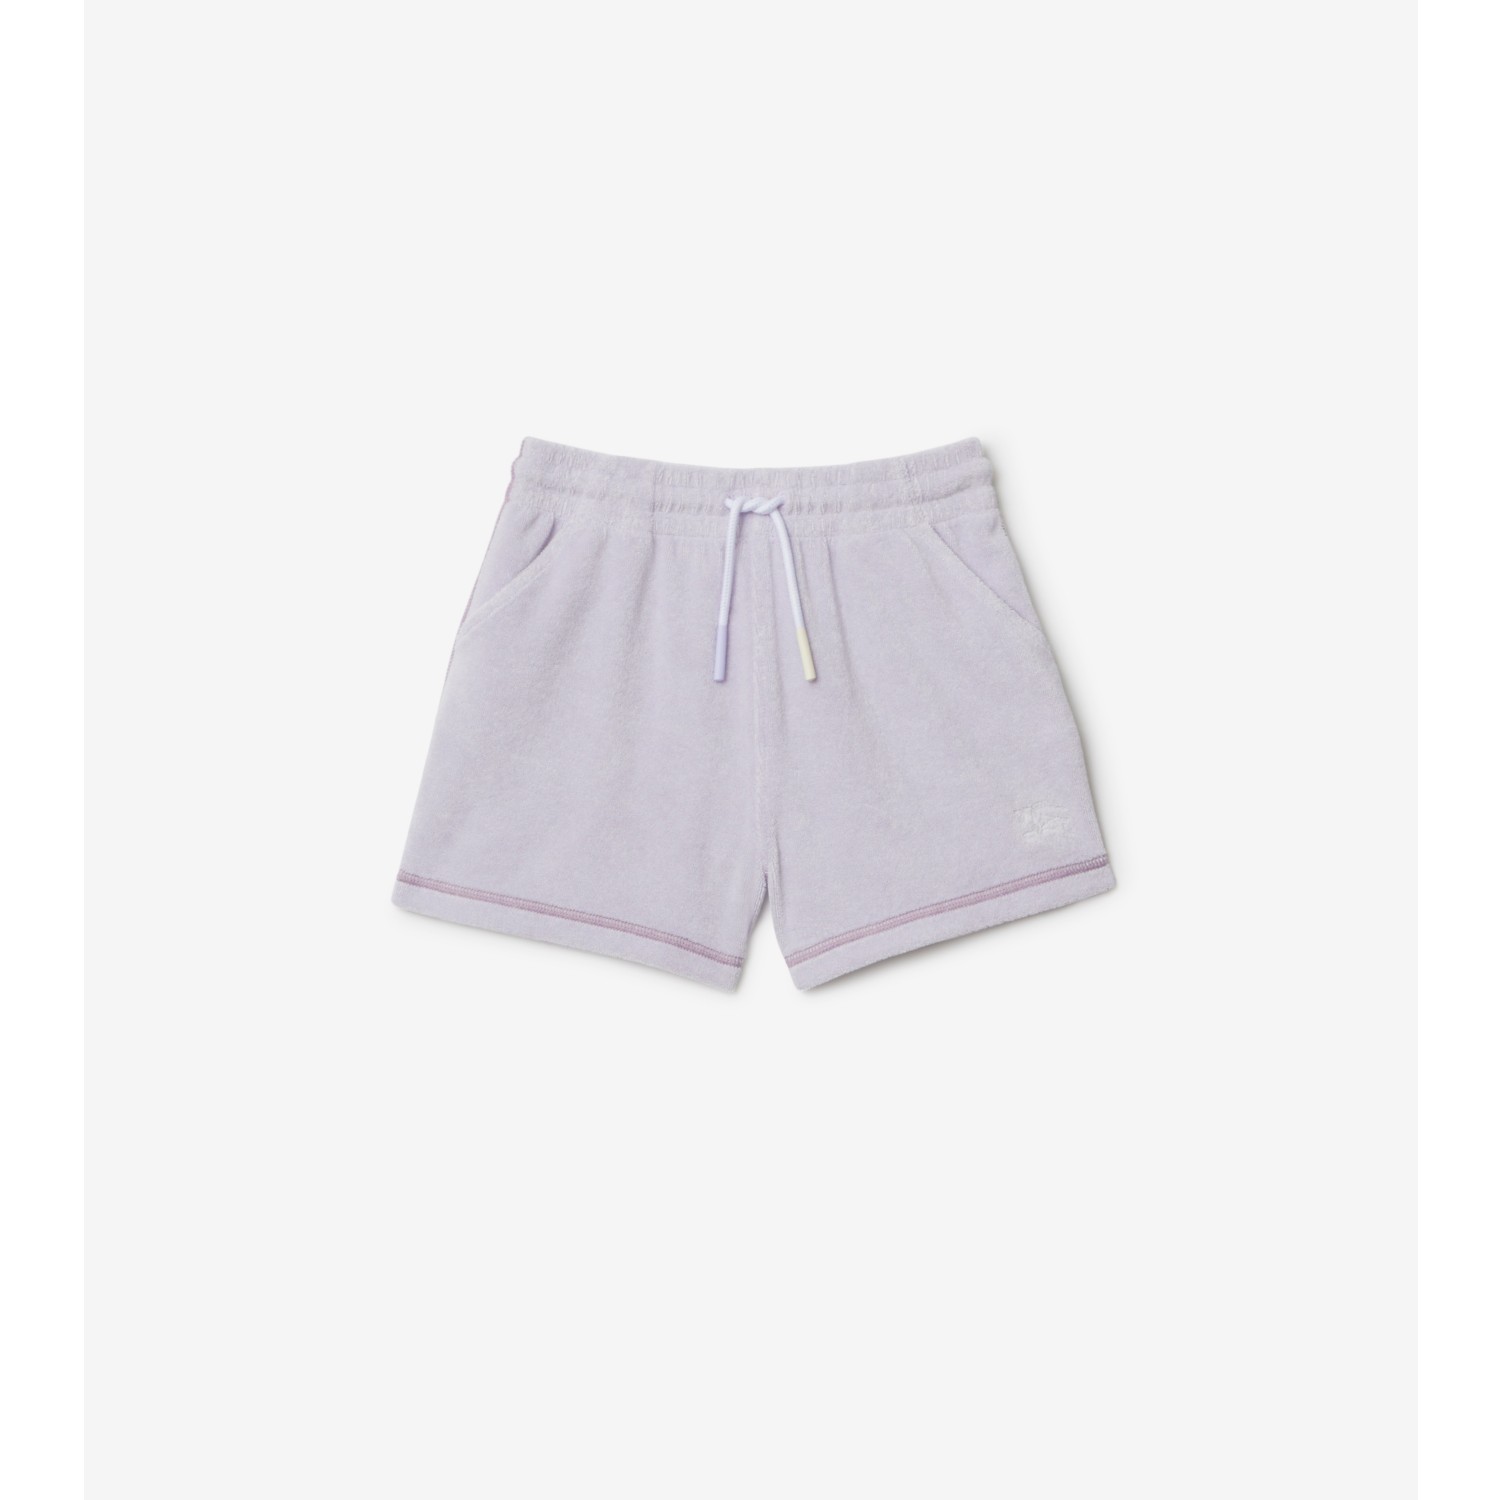 Regular Fit Cotton Shorts - Light purple - Men